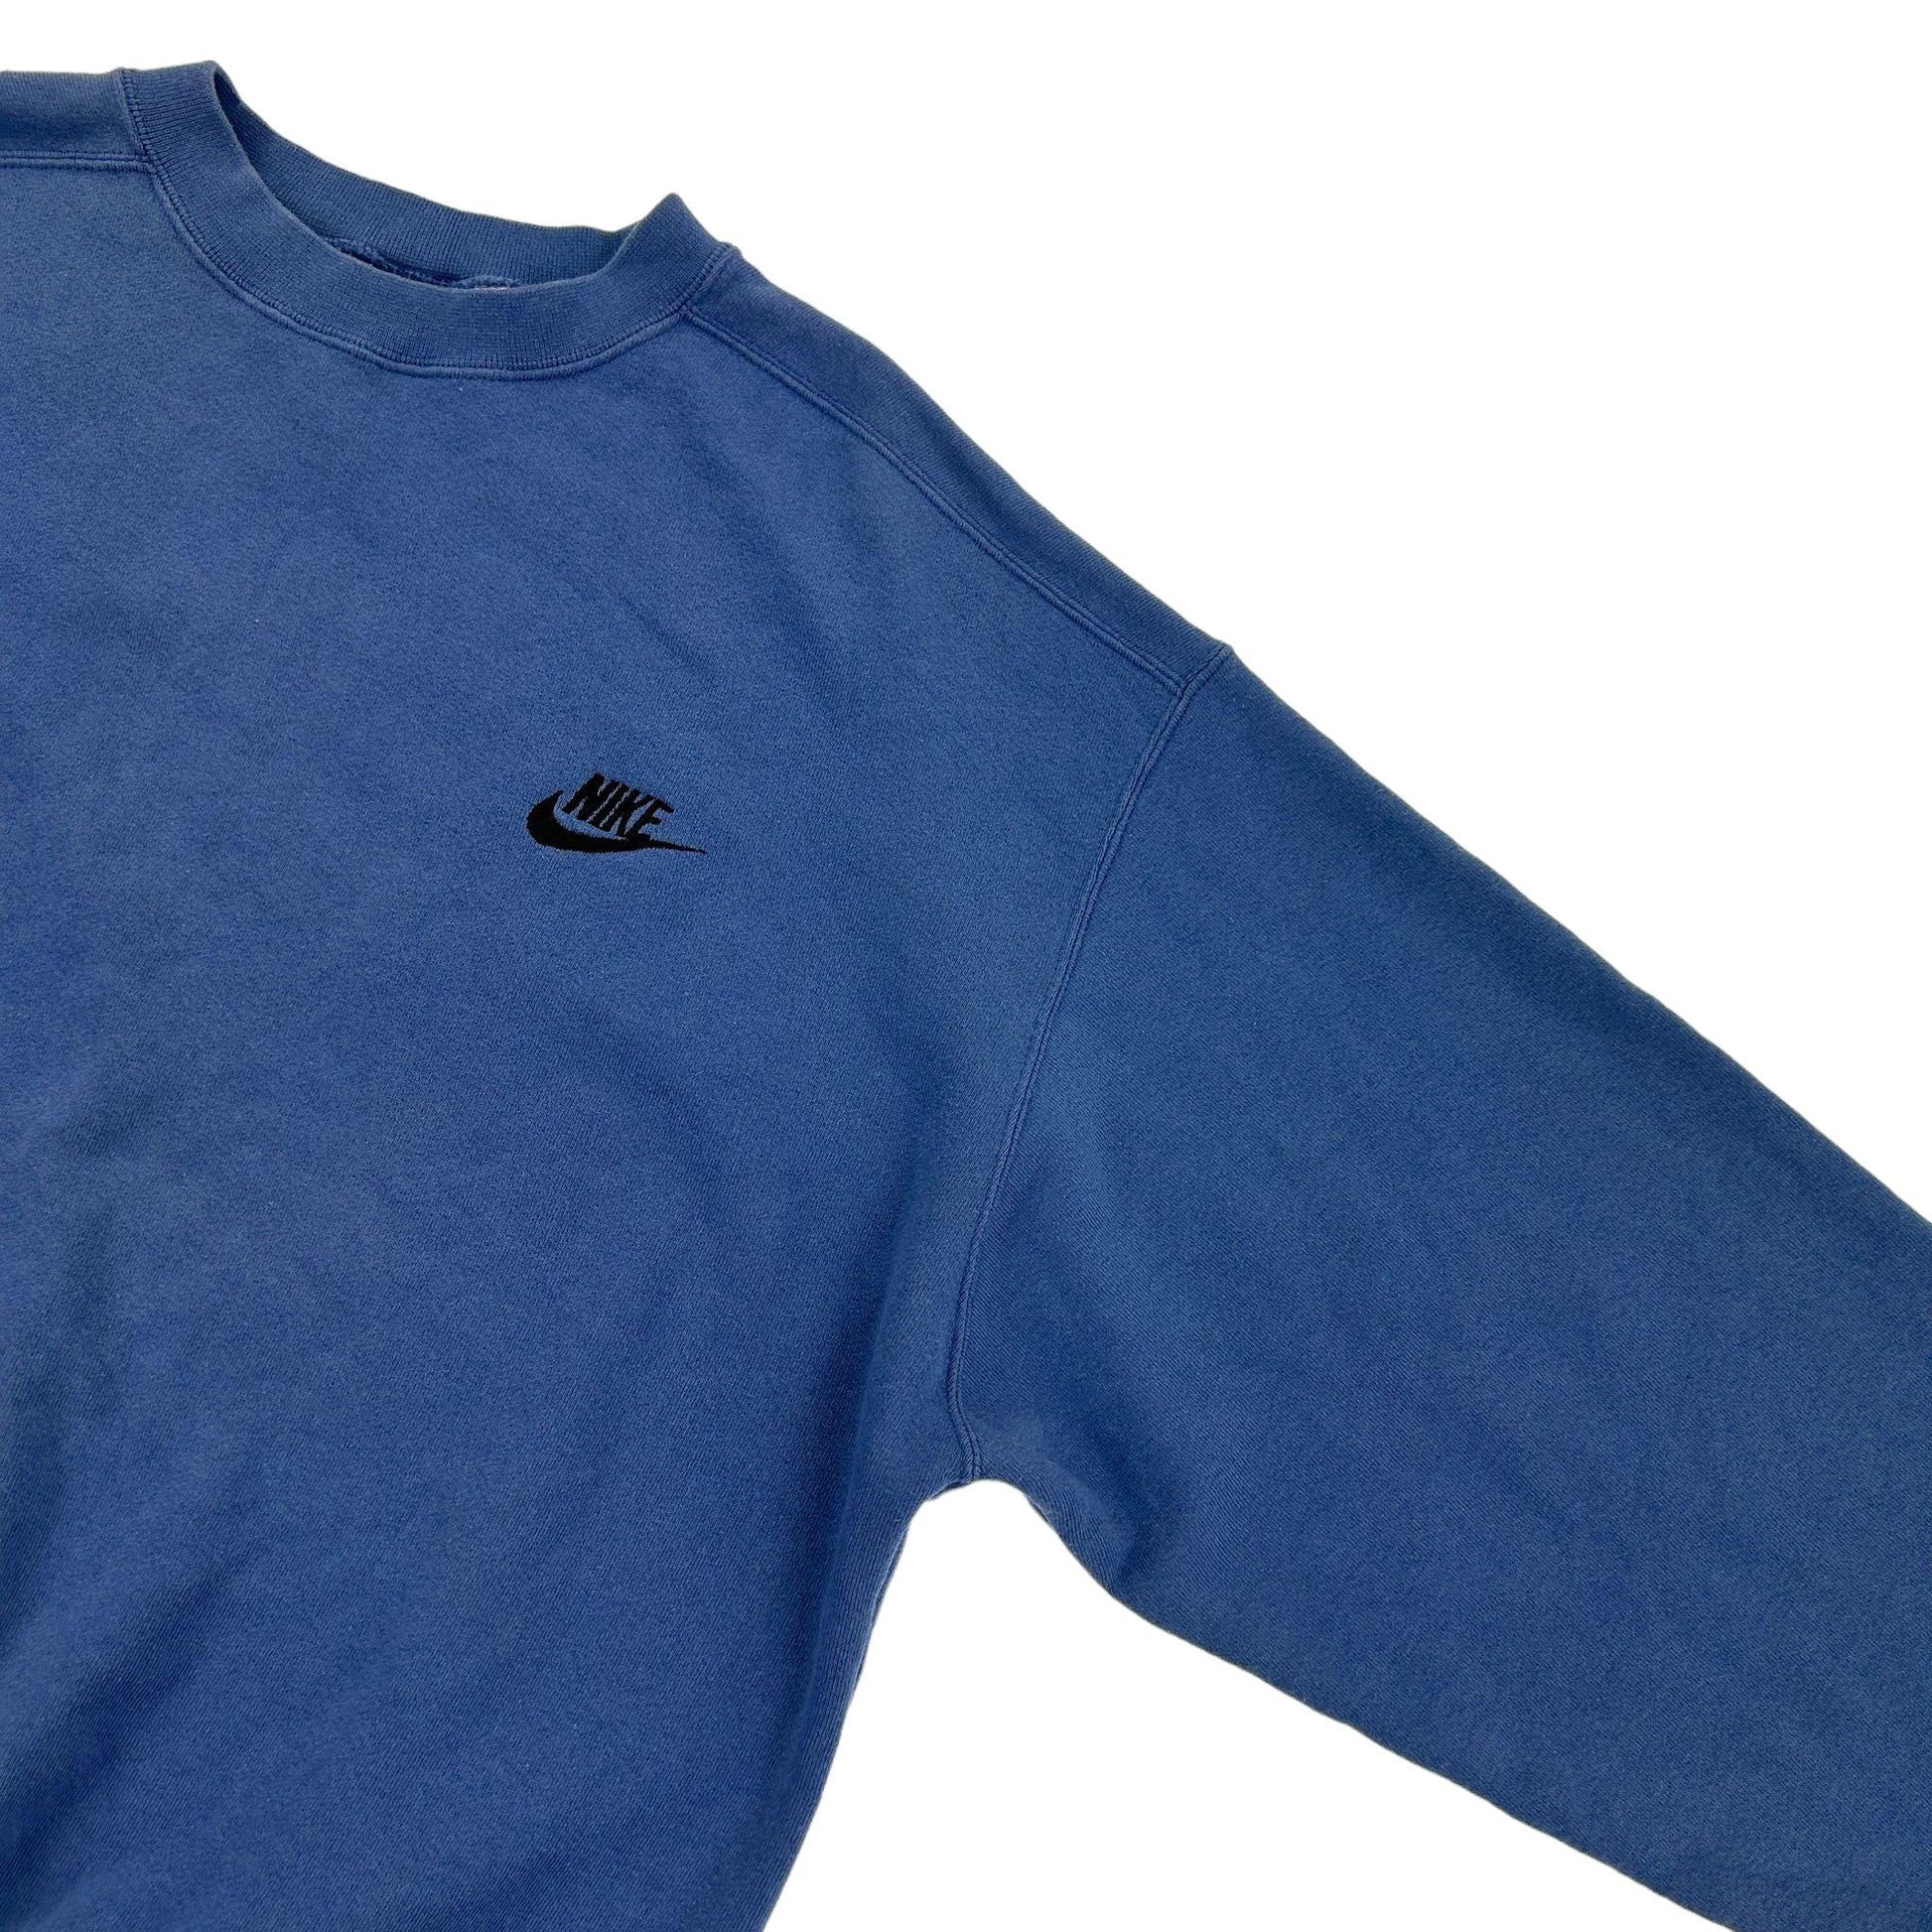 Vintage Nike Crewneck Sweatshirt Size L - Known Source